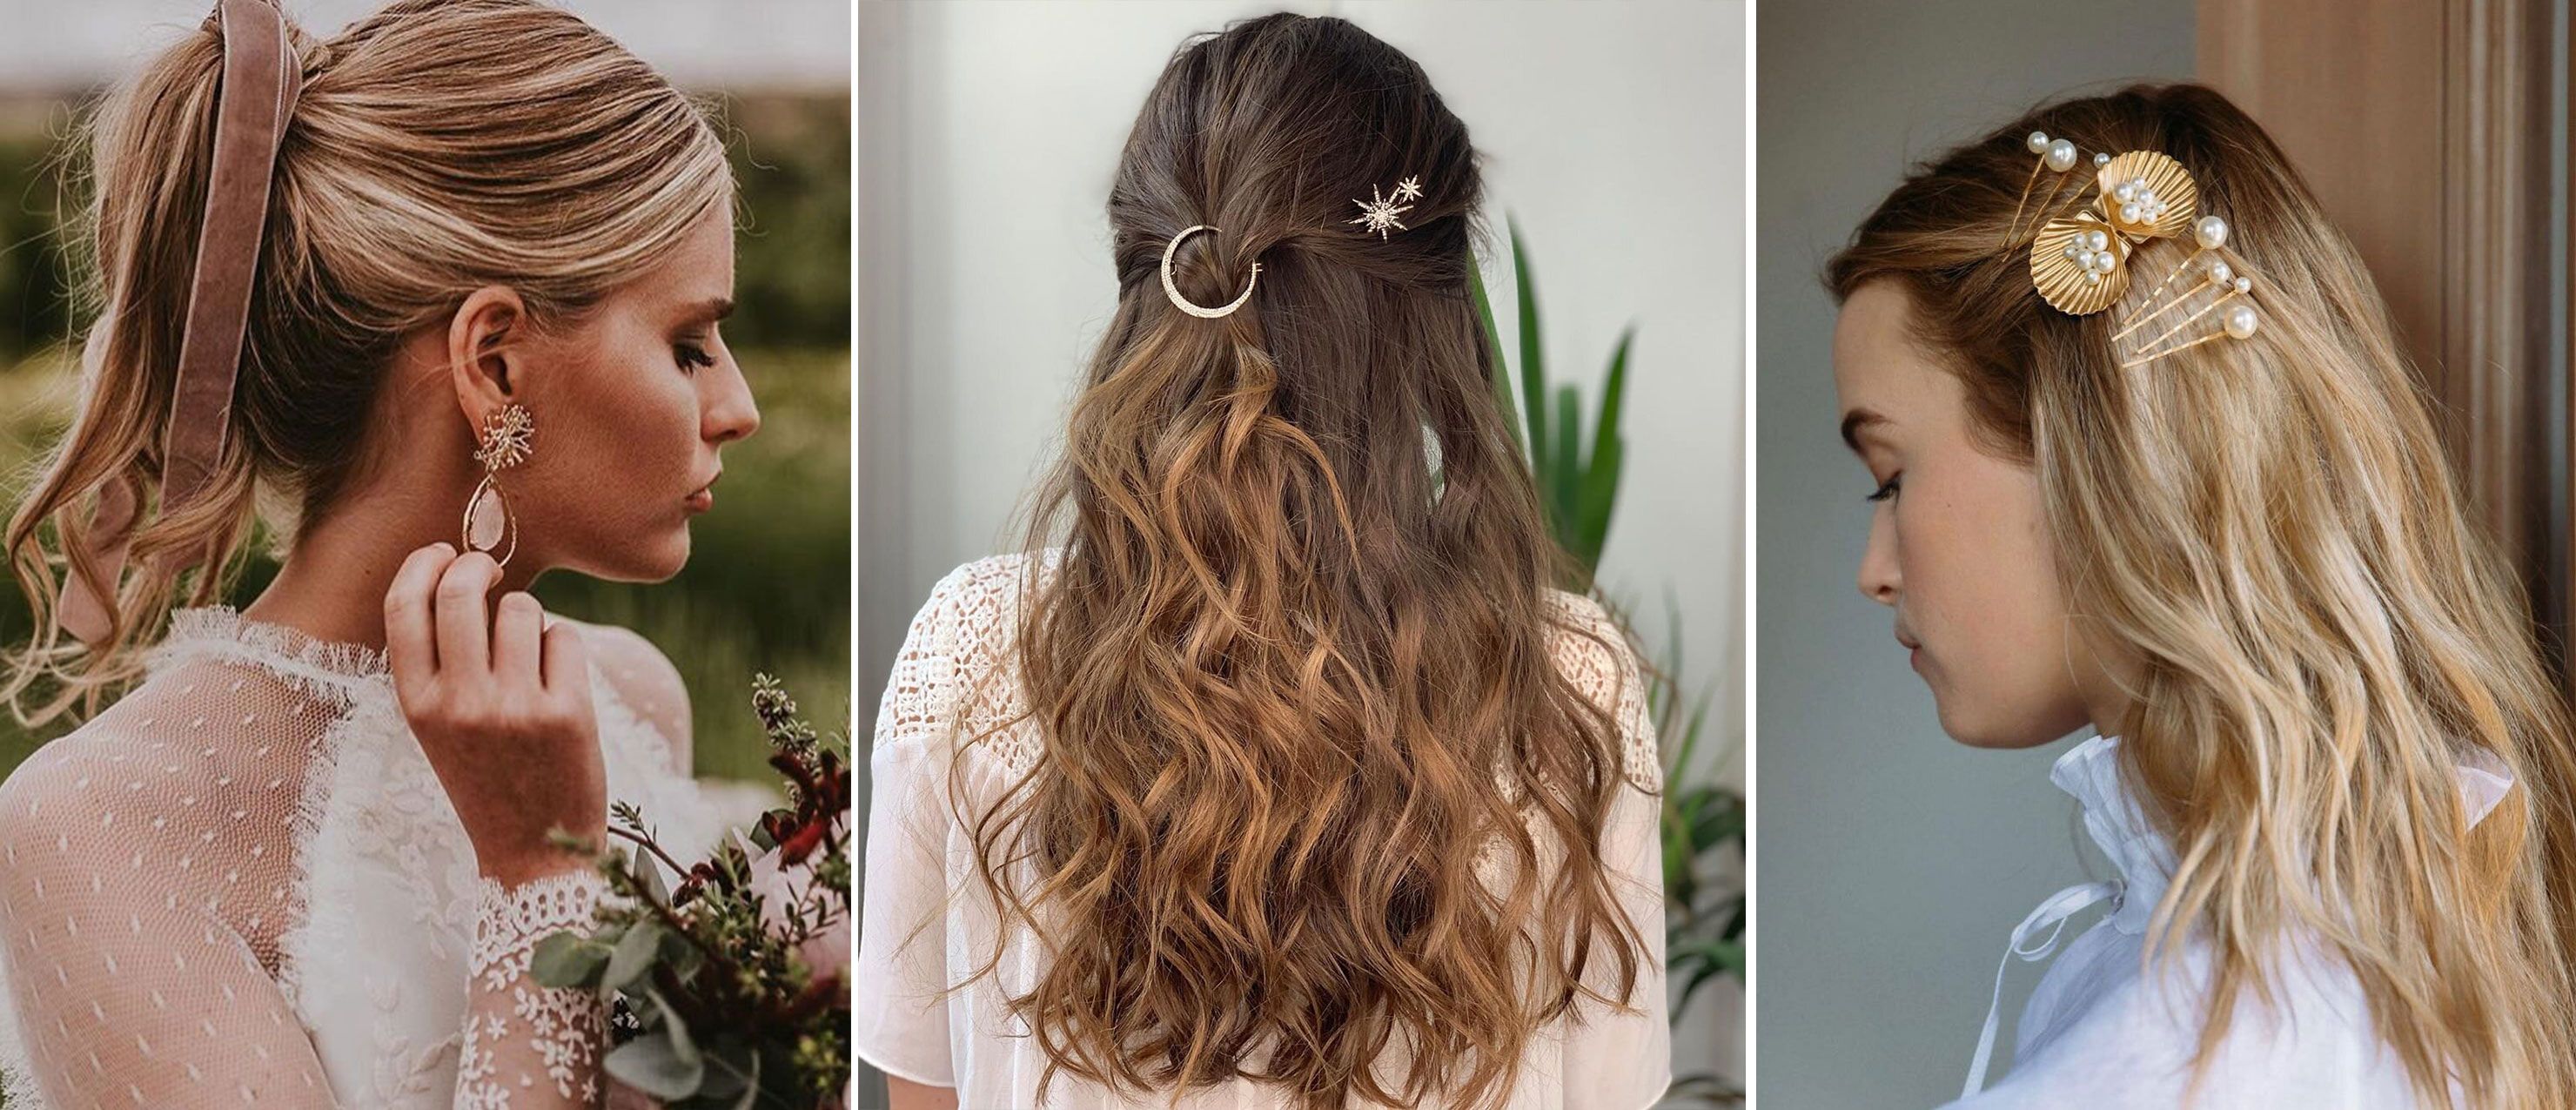 10 peinados de novia tan sencillos como elegantes que amarán aquellas que  busquen un look romántico  10 peinados con aires románticos que cautivarán  a las futuras novias